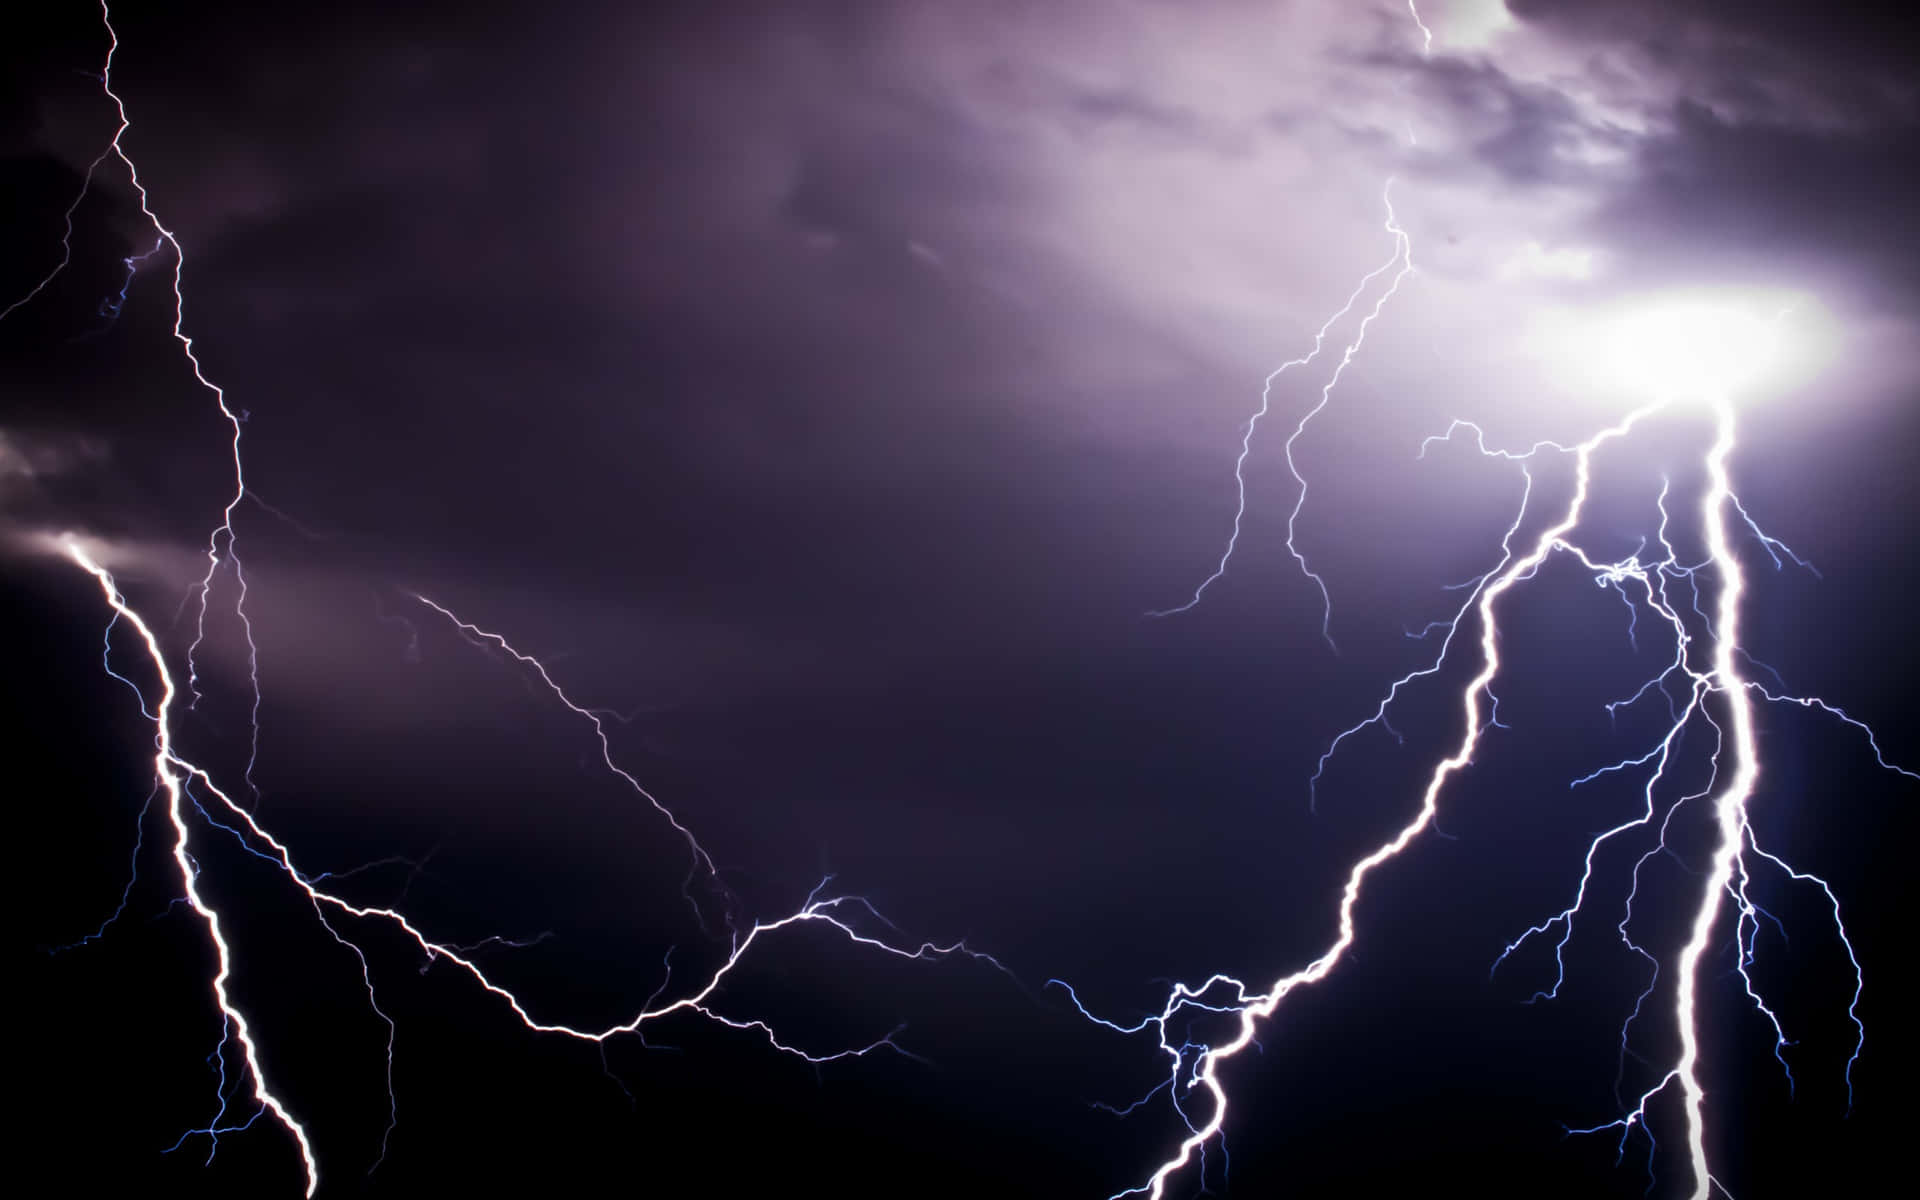 A powerful bolt of lightning striking at night